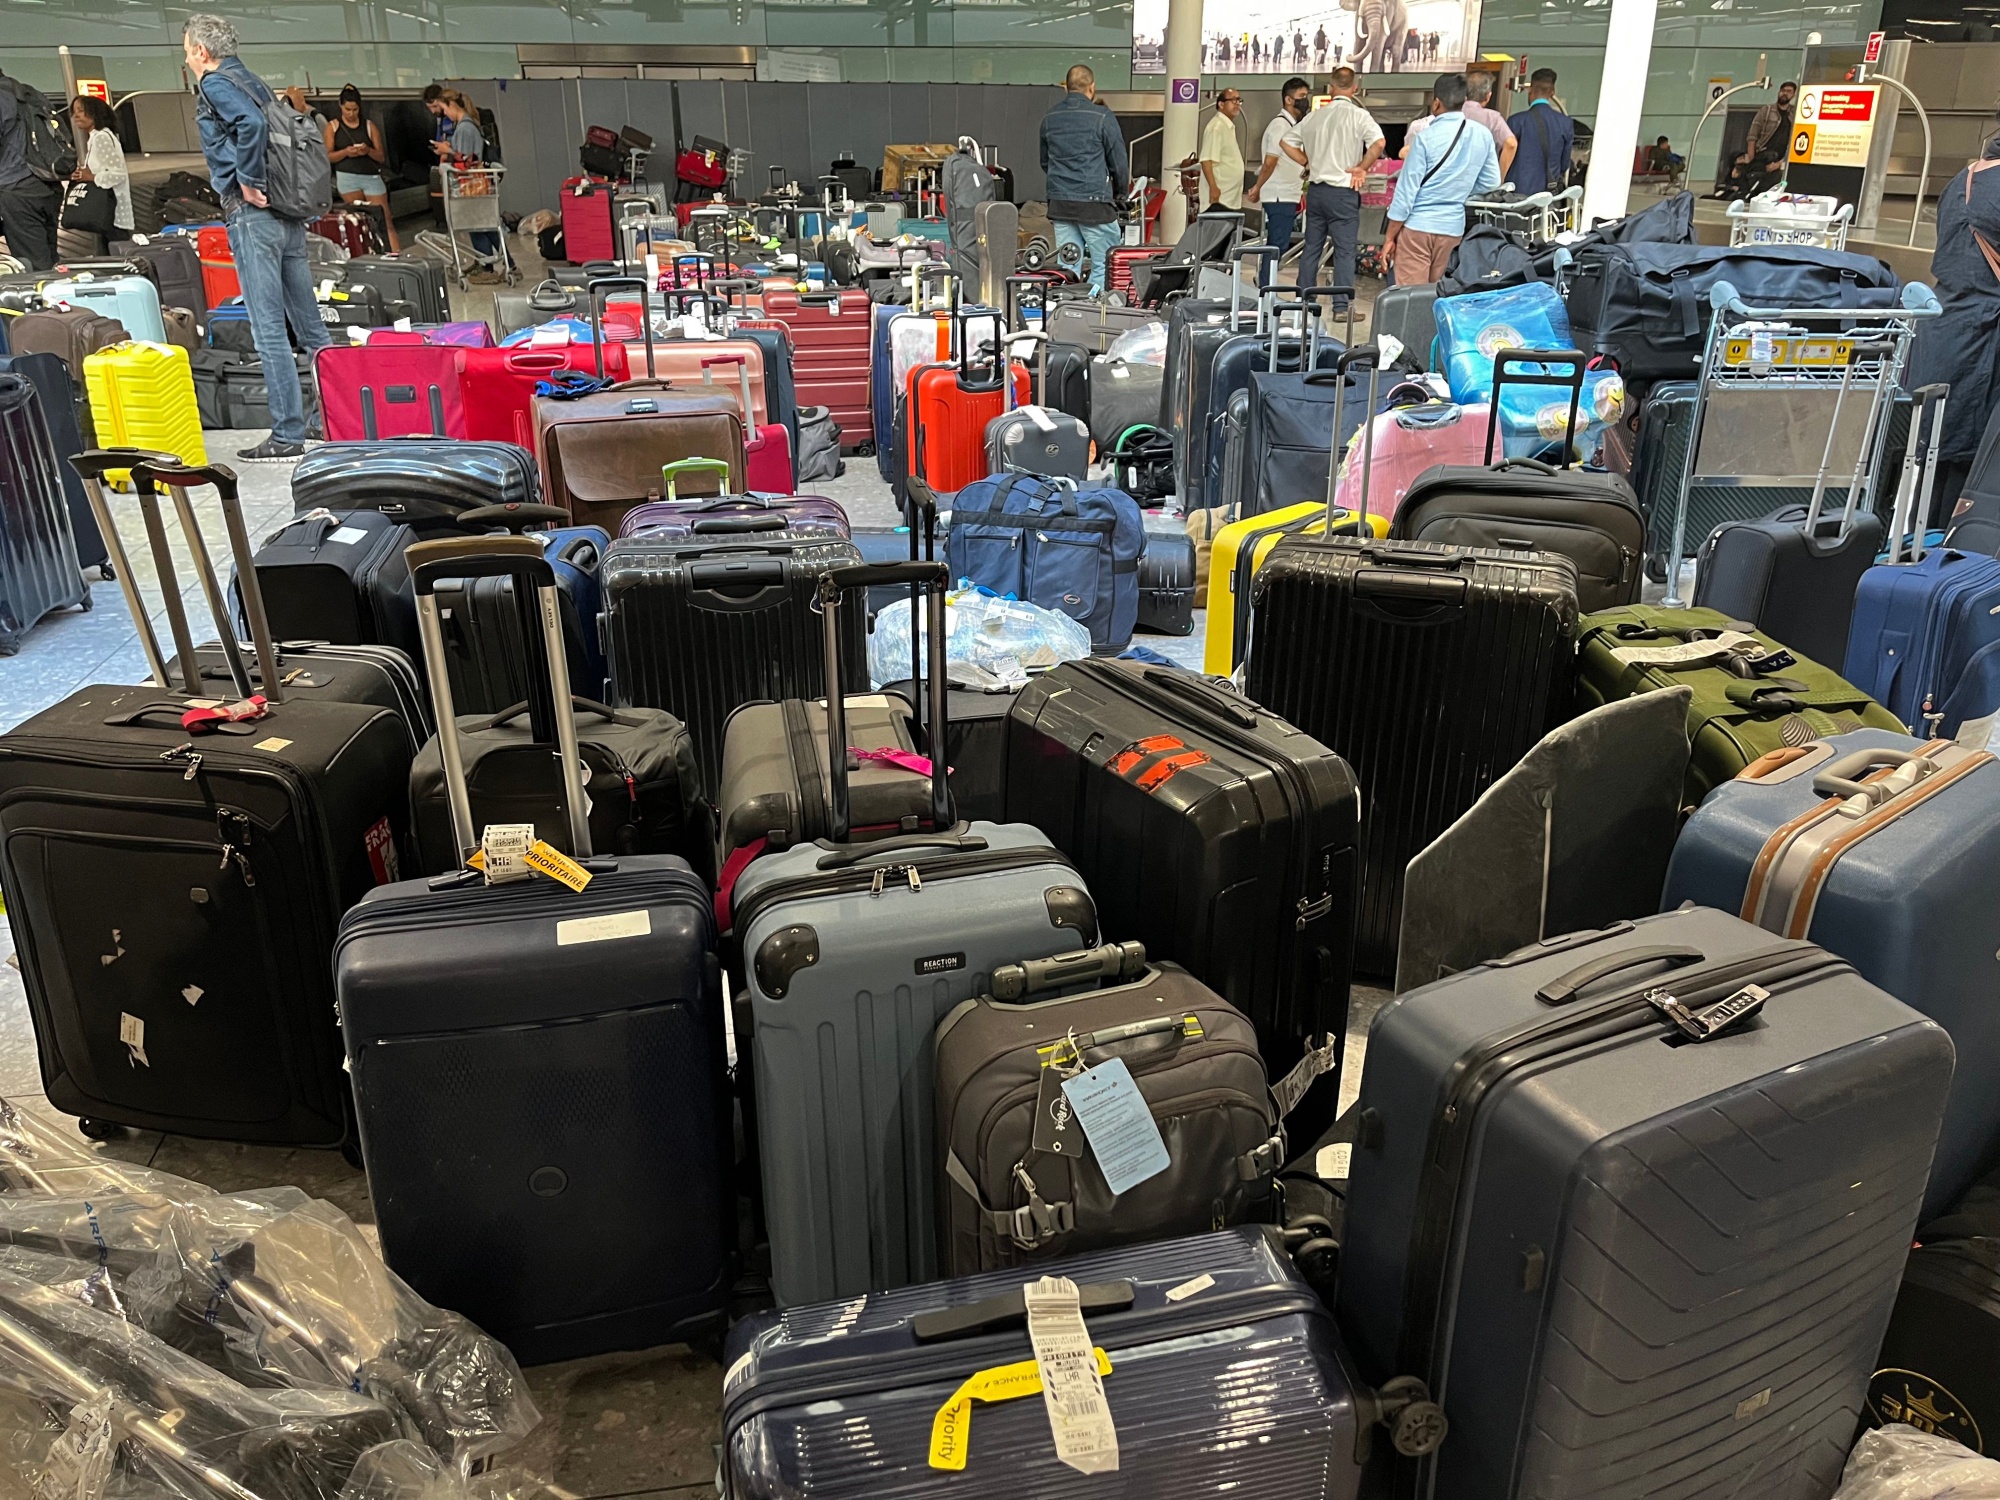 Luggage&nbsp;at Heathrow's terminal three bagage claim on July 8.